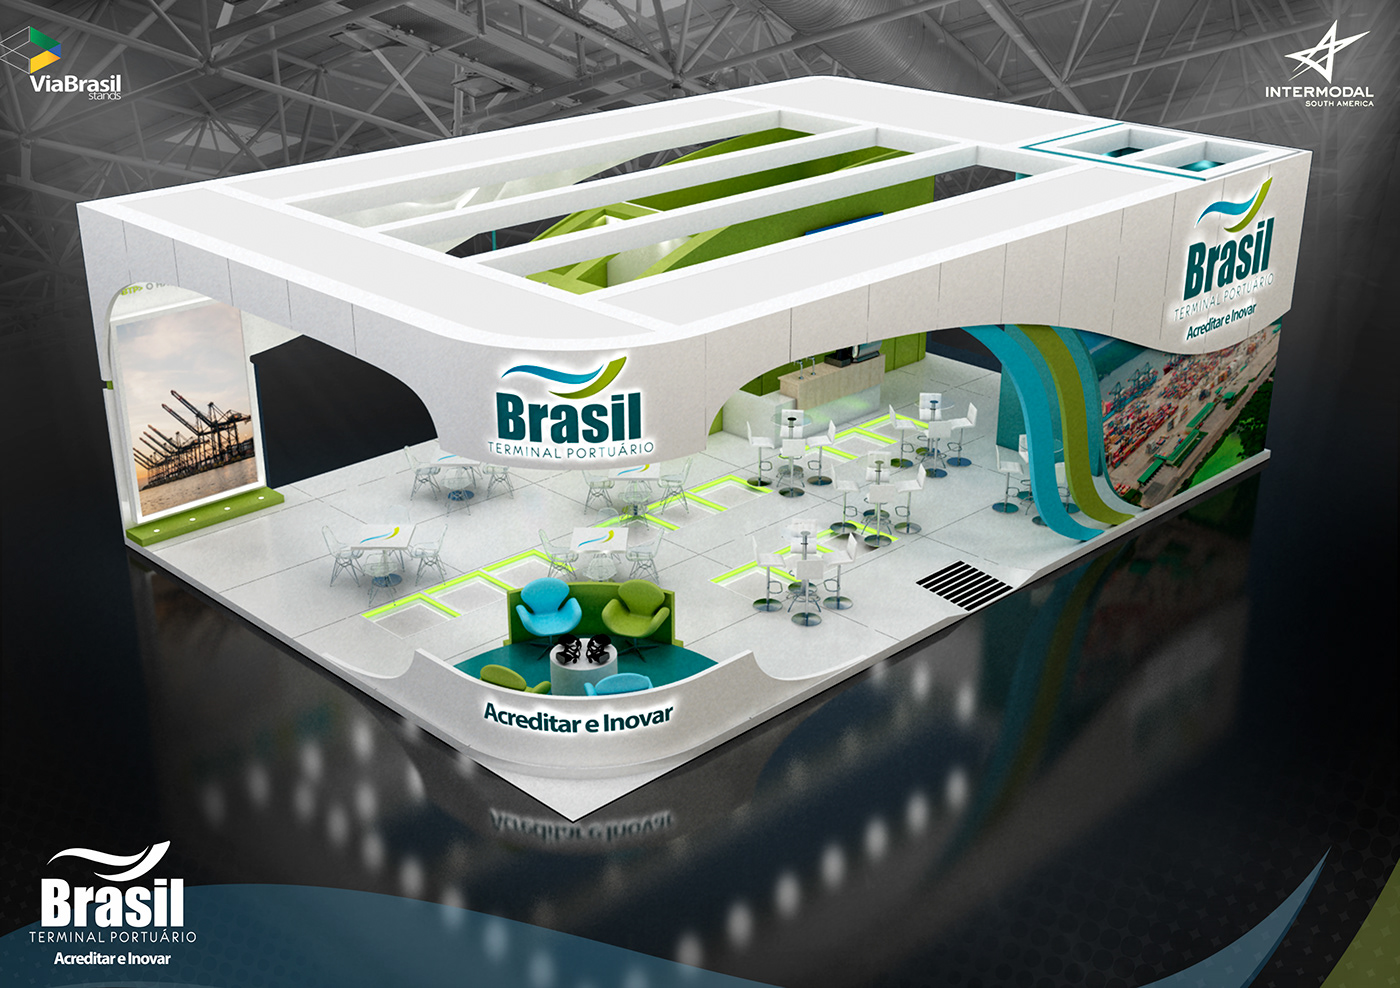 btp intermodal brasil terminal portuário Stand estande booth Exhibition Stand Design exhibition booth design